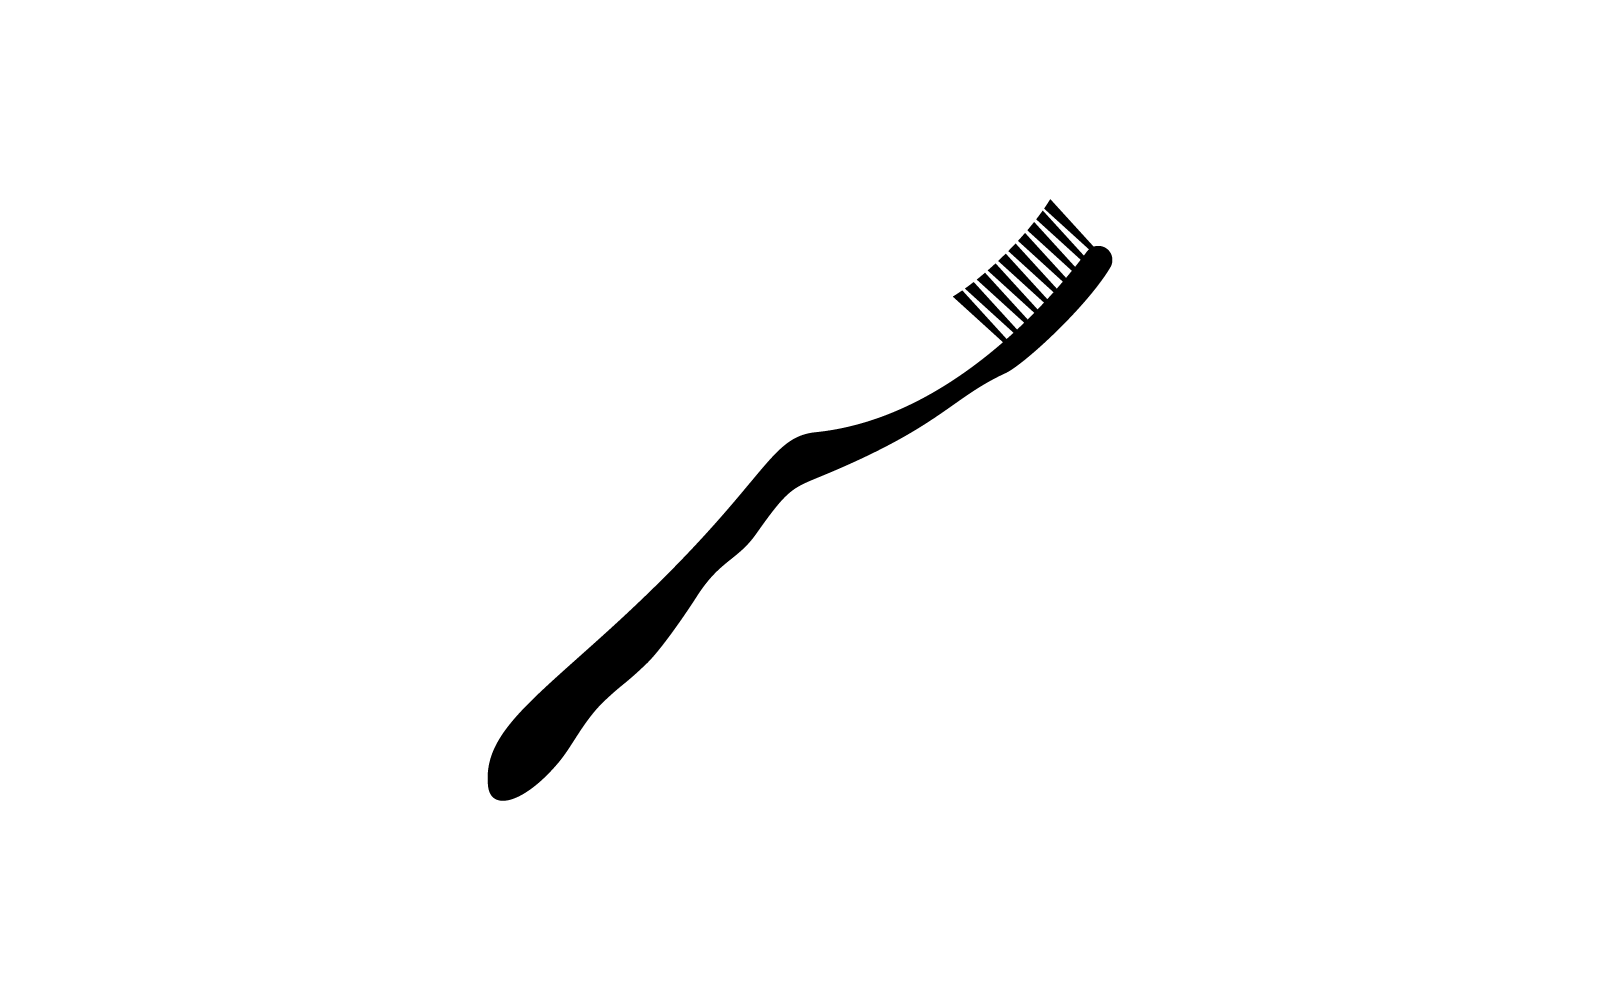 Toothbrush logo illustration design icon template